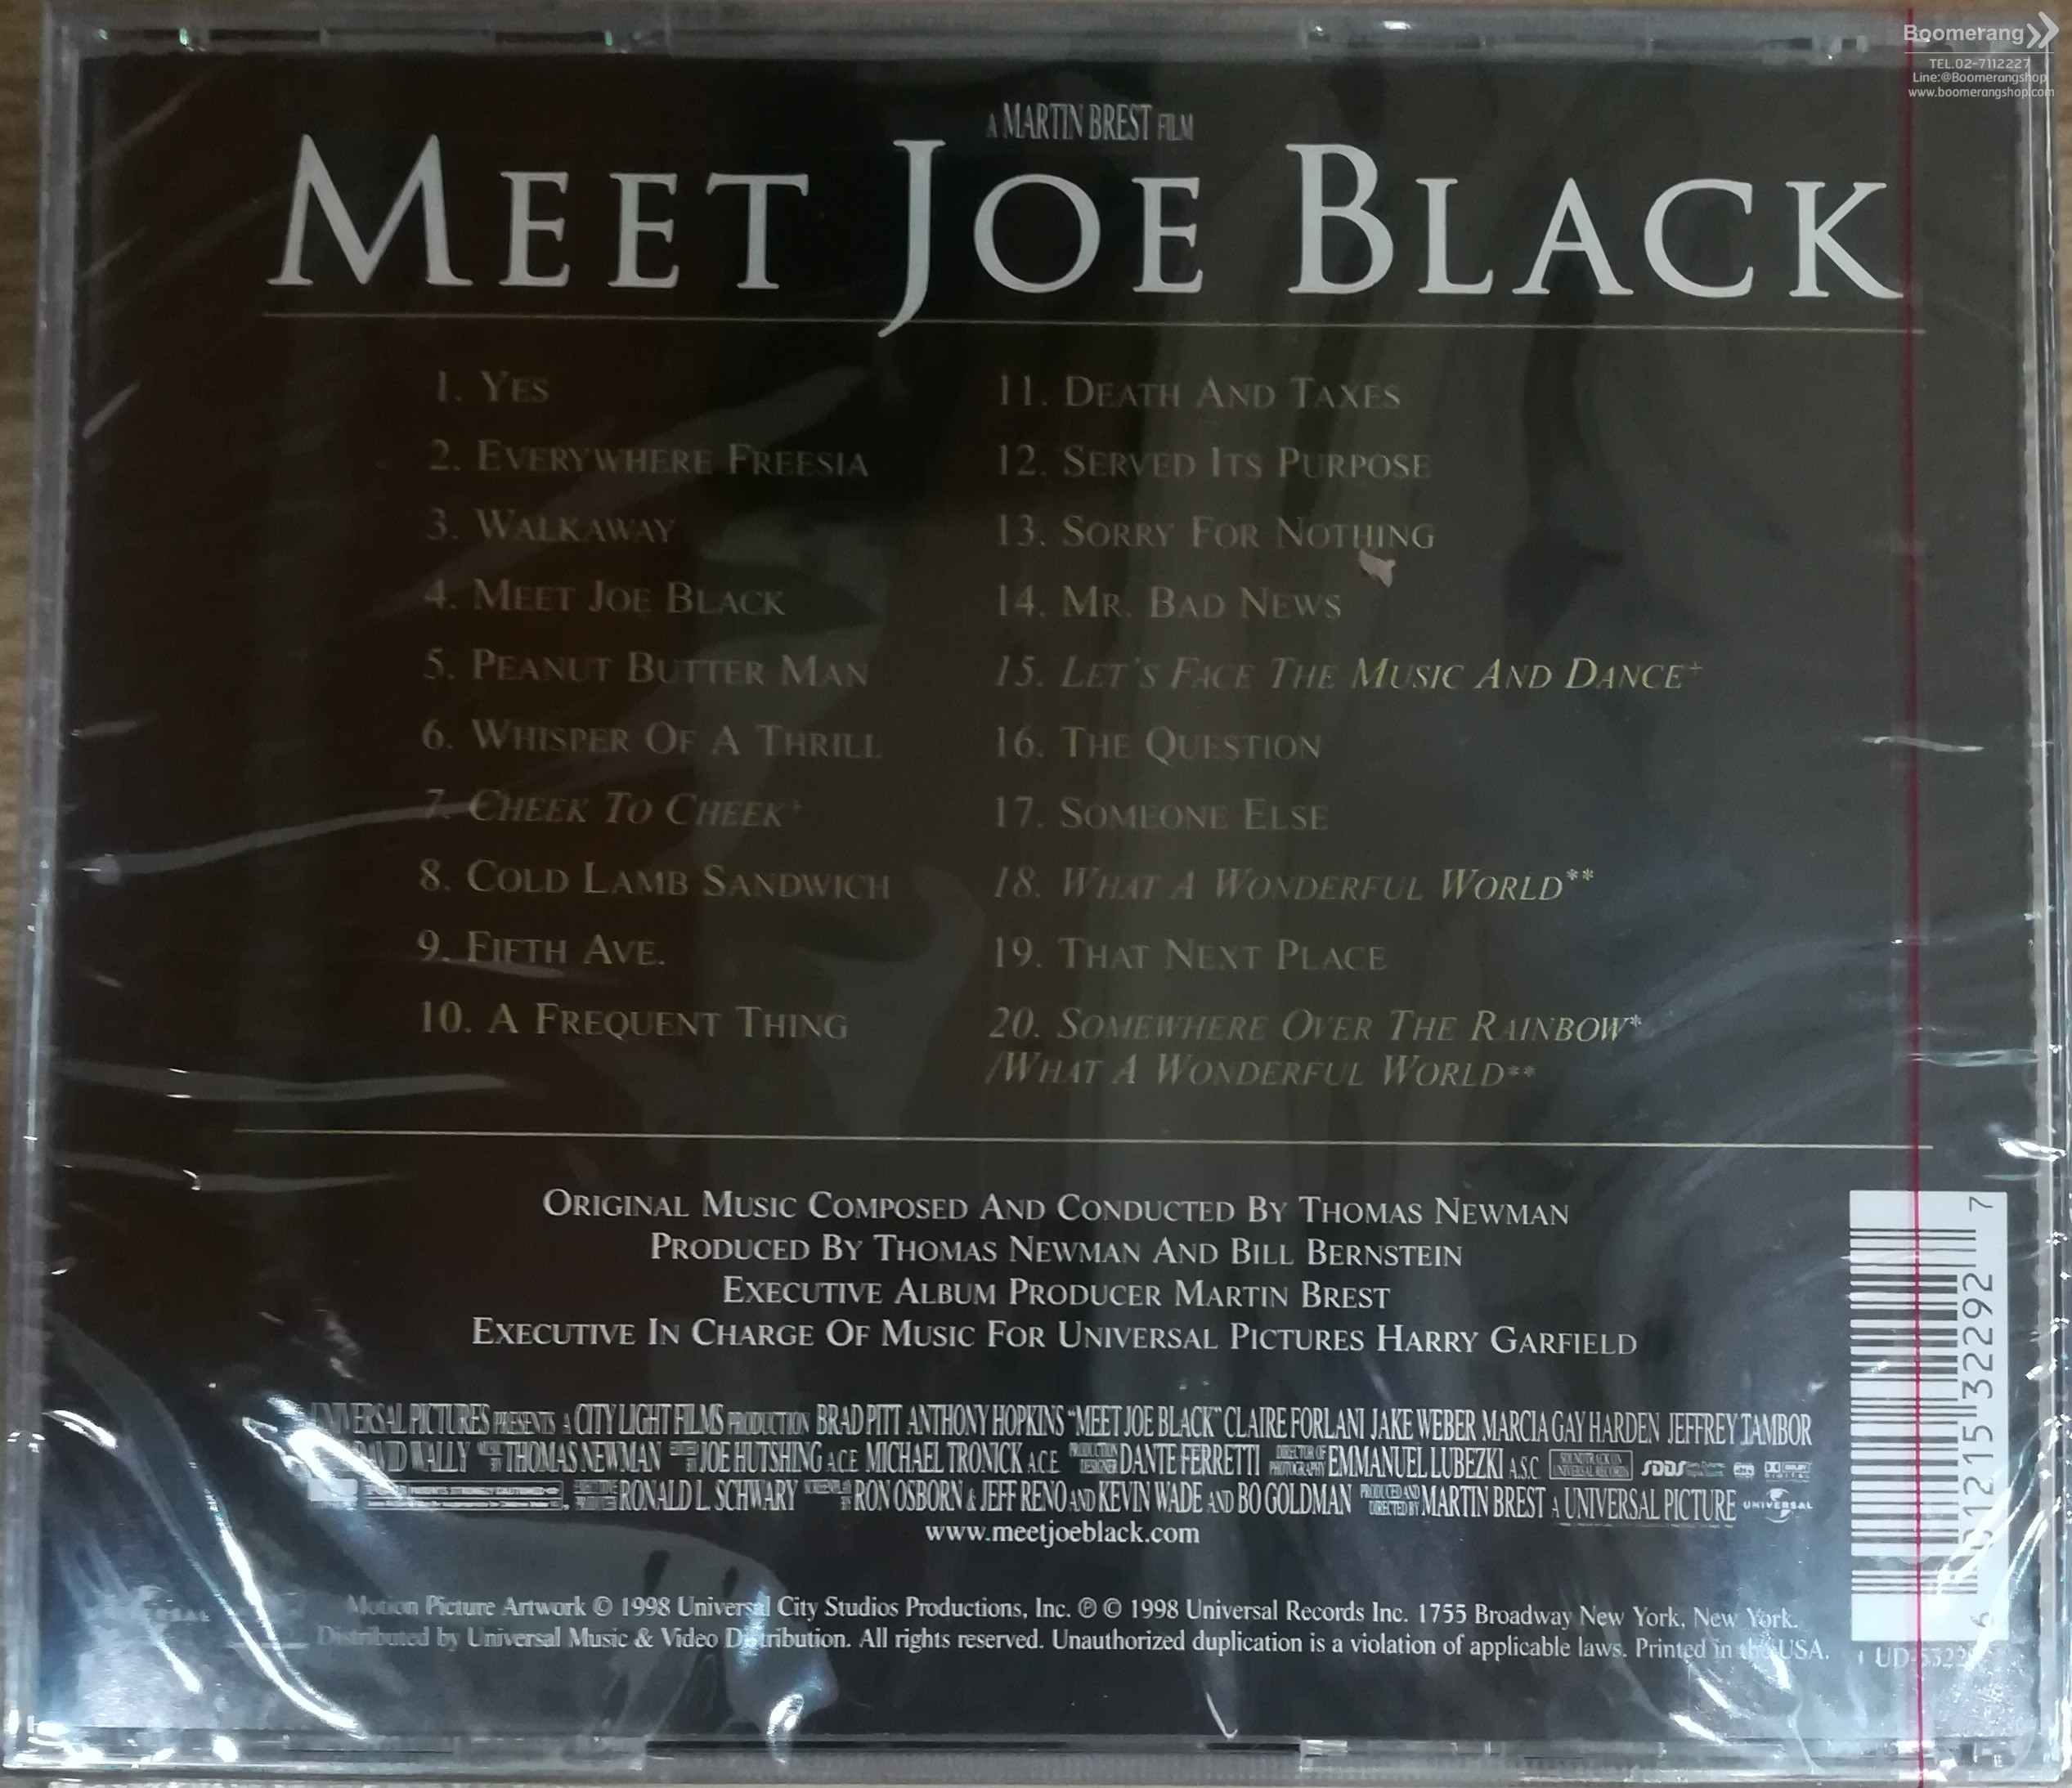 wonderful world meet joe black soundtrack